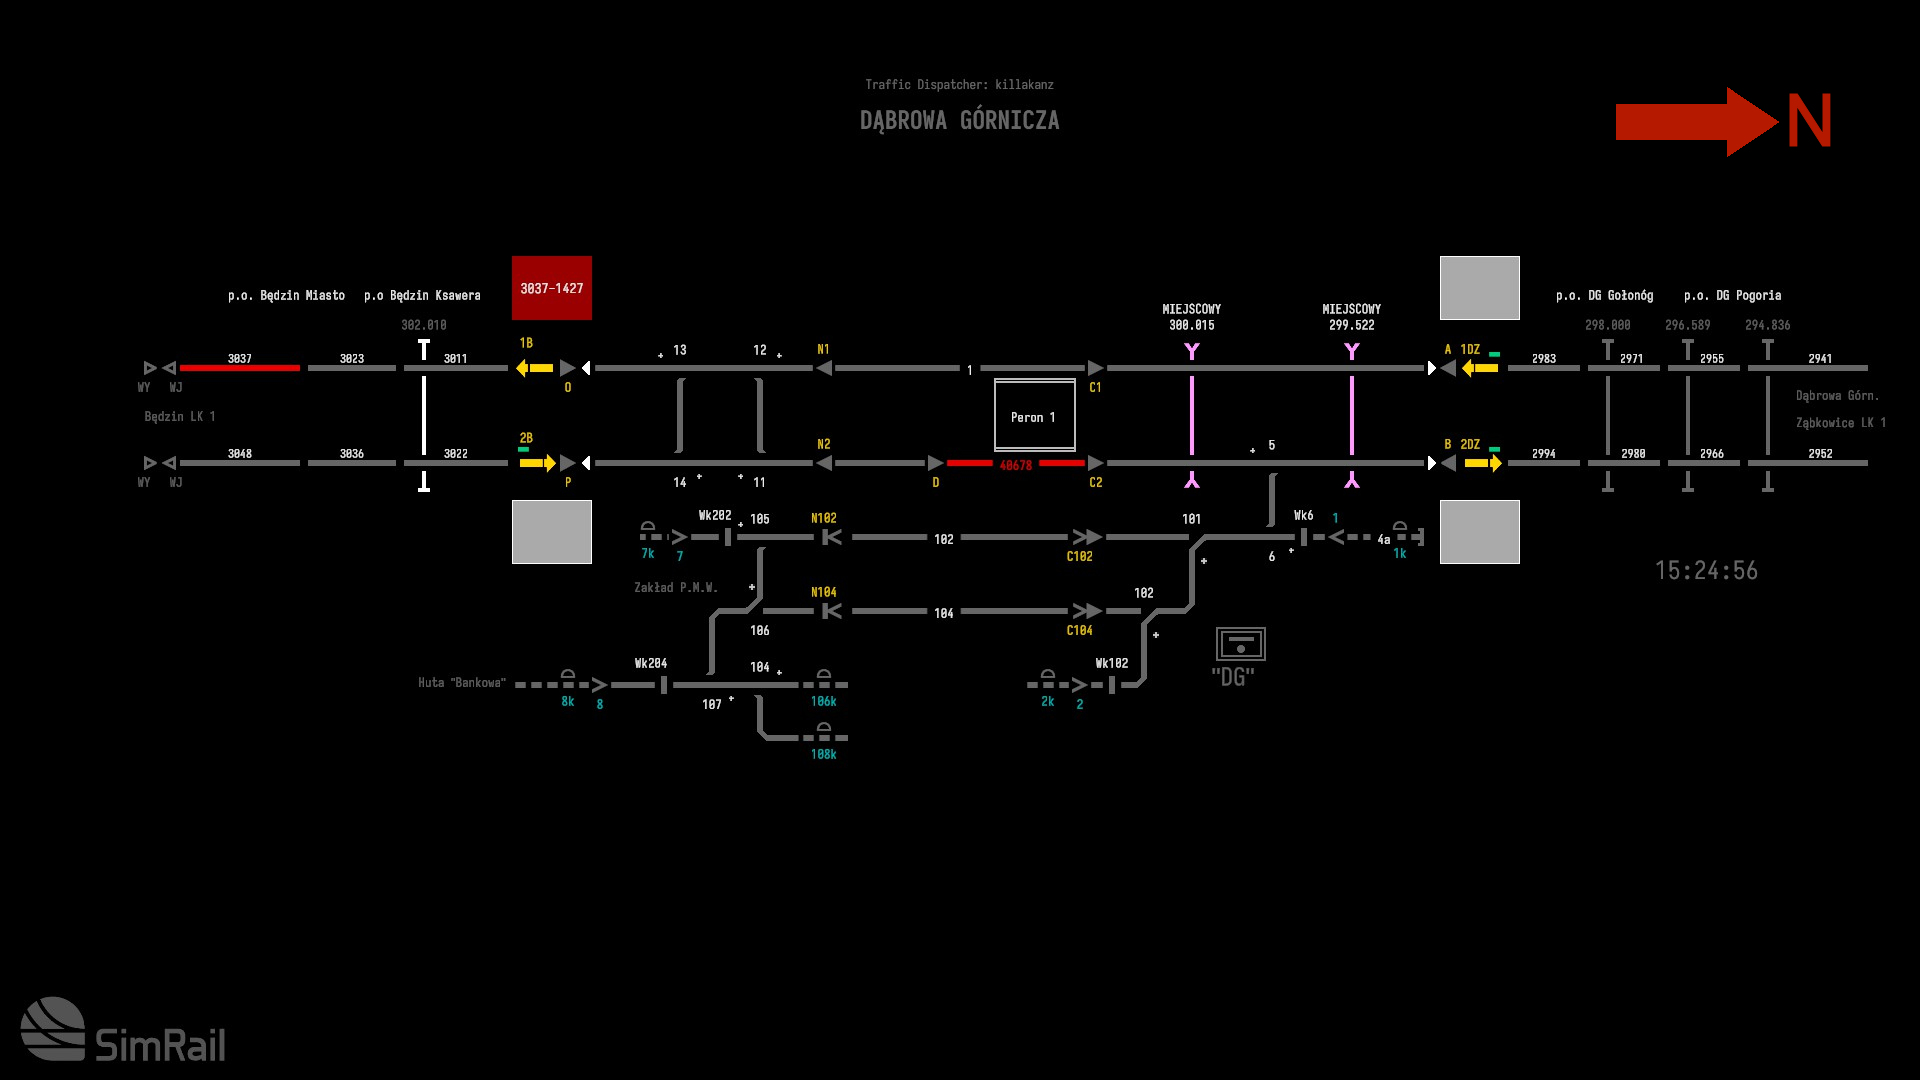 SimRail - The Railway Simulator - Basic Dispatching Full Guide - Dabrowa Gornicza - In Detail (computerised) - 46141D8